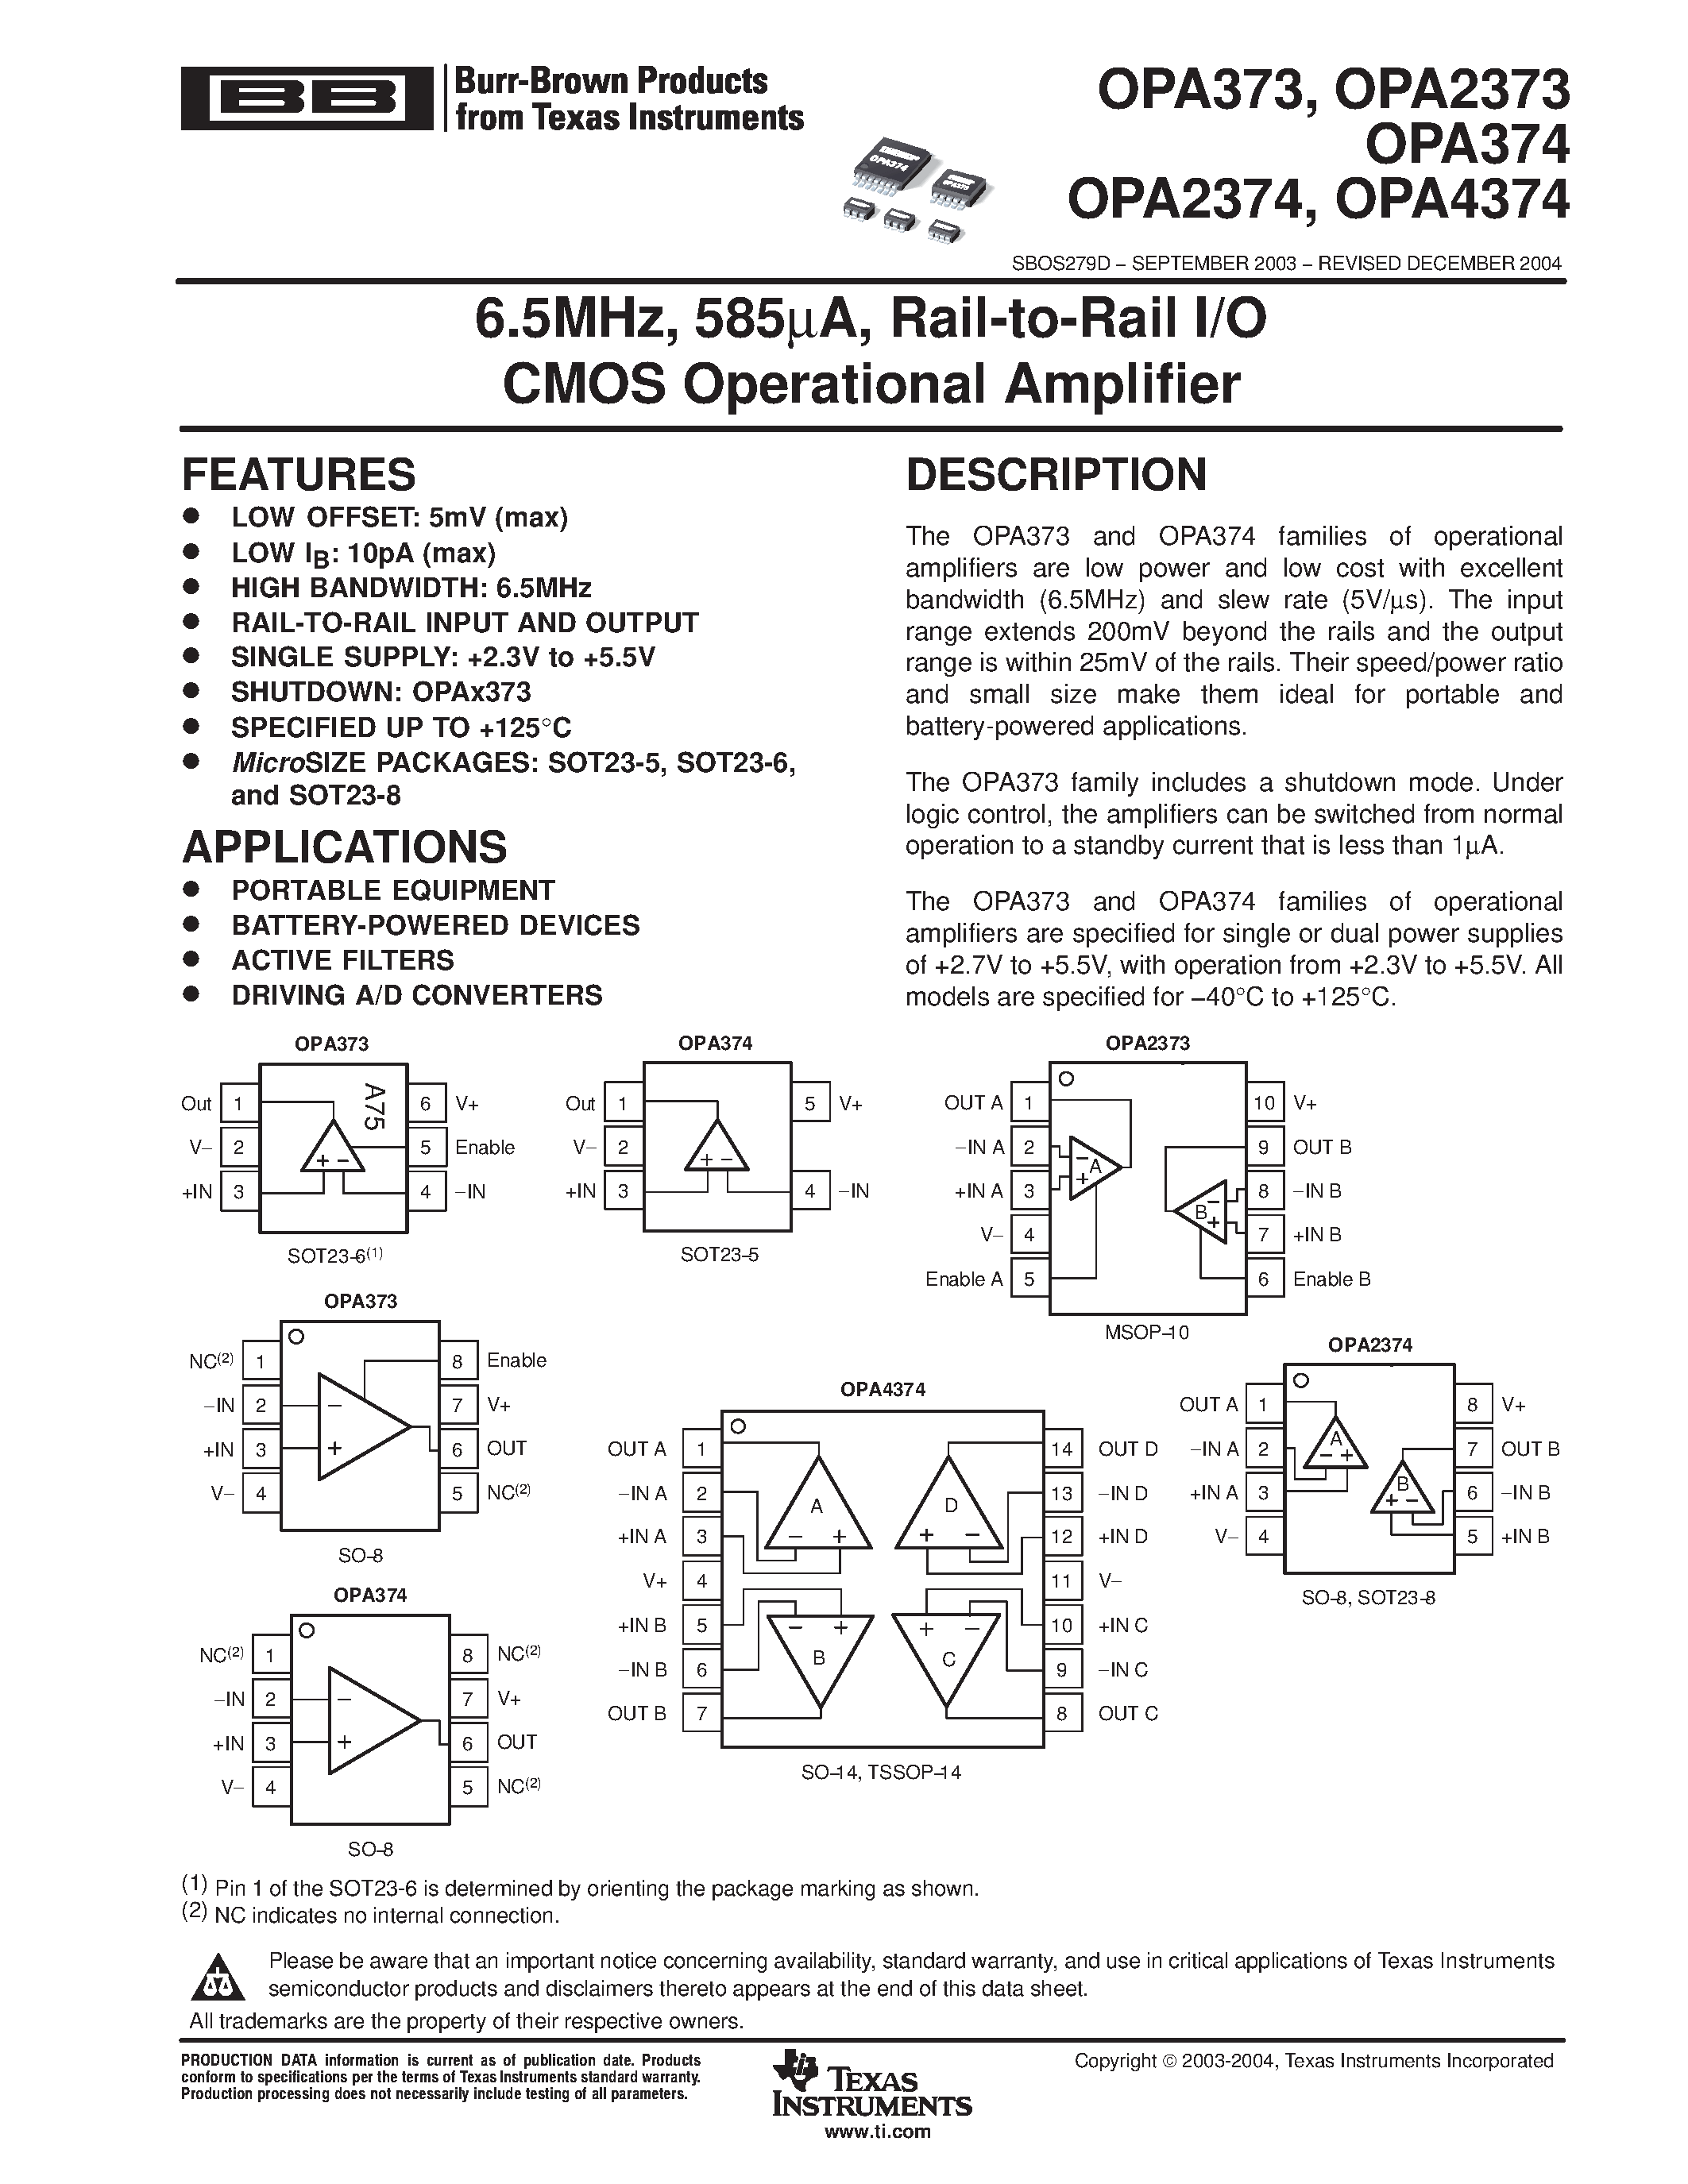 Datasheet OPA2373 - 6.5MHz / 585UA / Rail-to-Rail I/O CMOS Operational Amplifier page 1